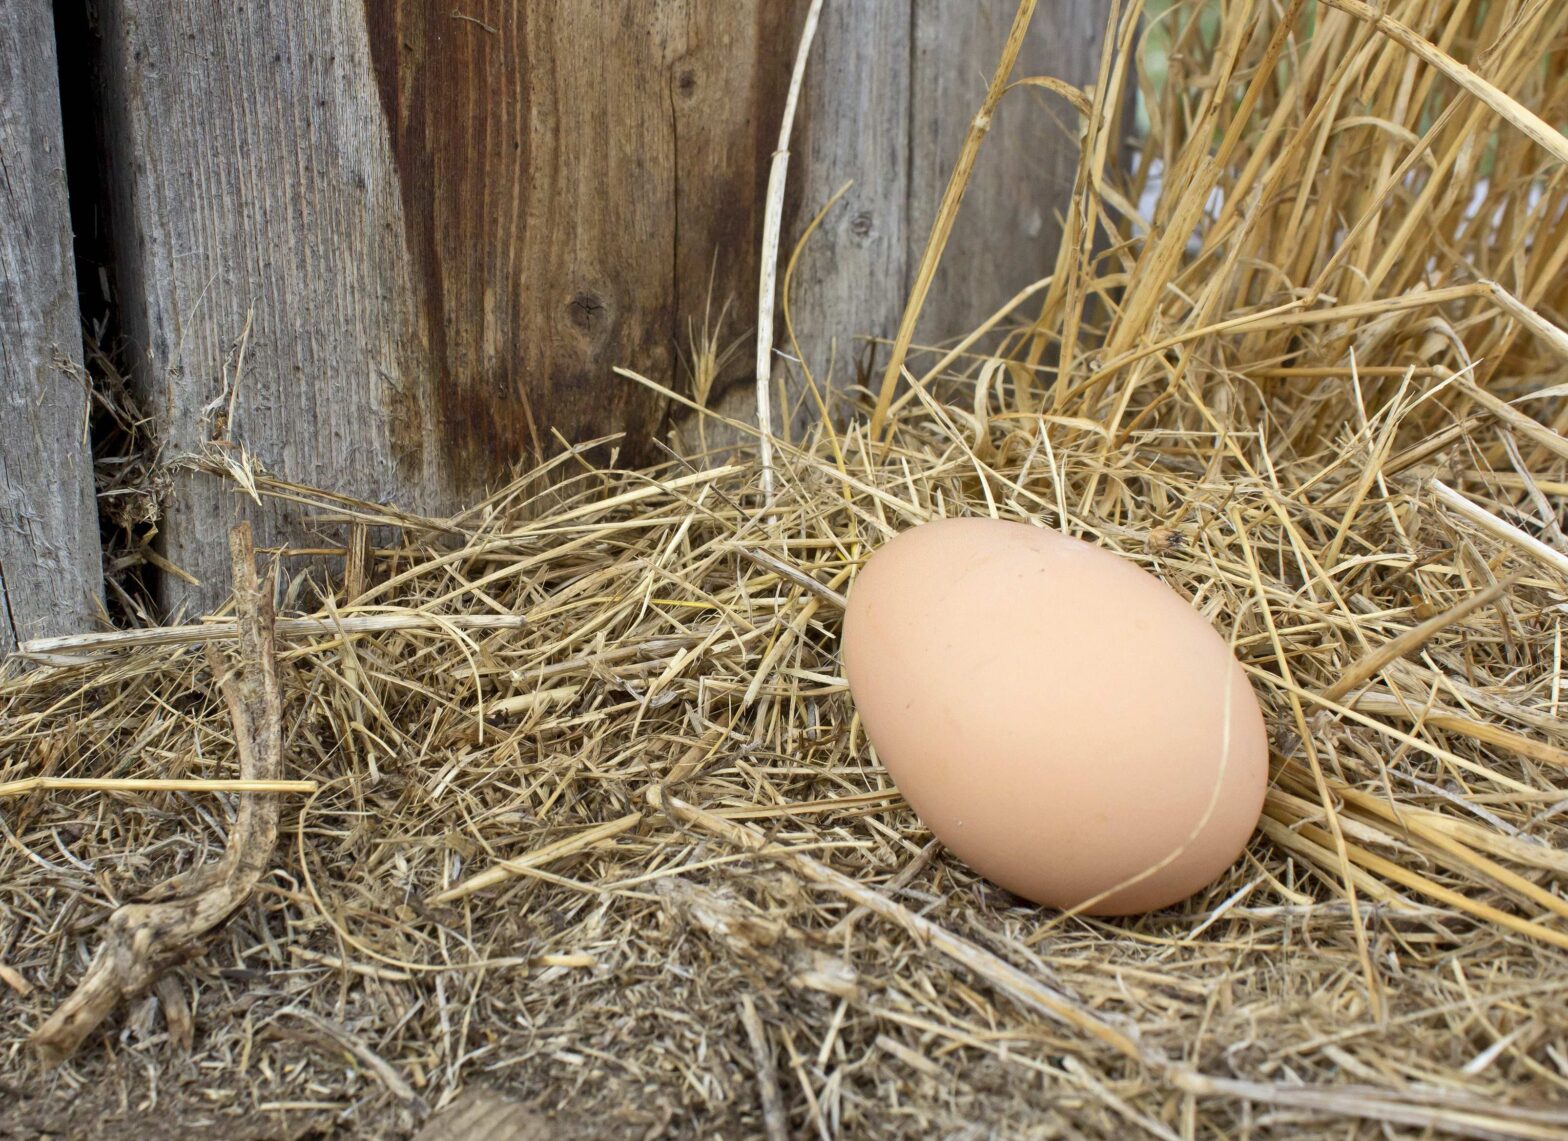 Găinile s-au oprit din ouat